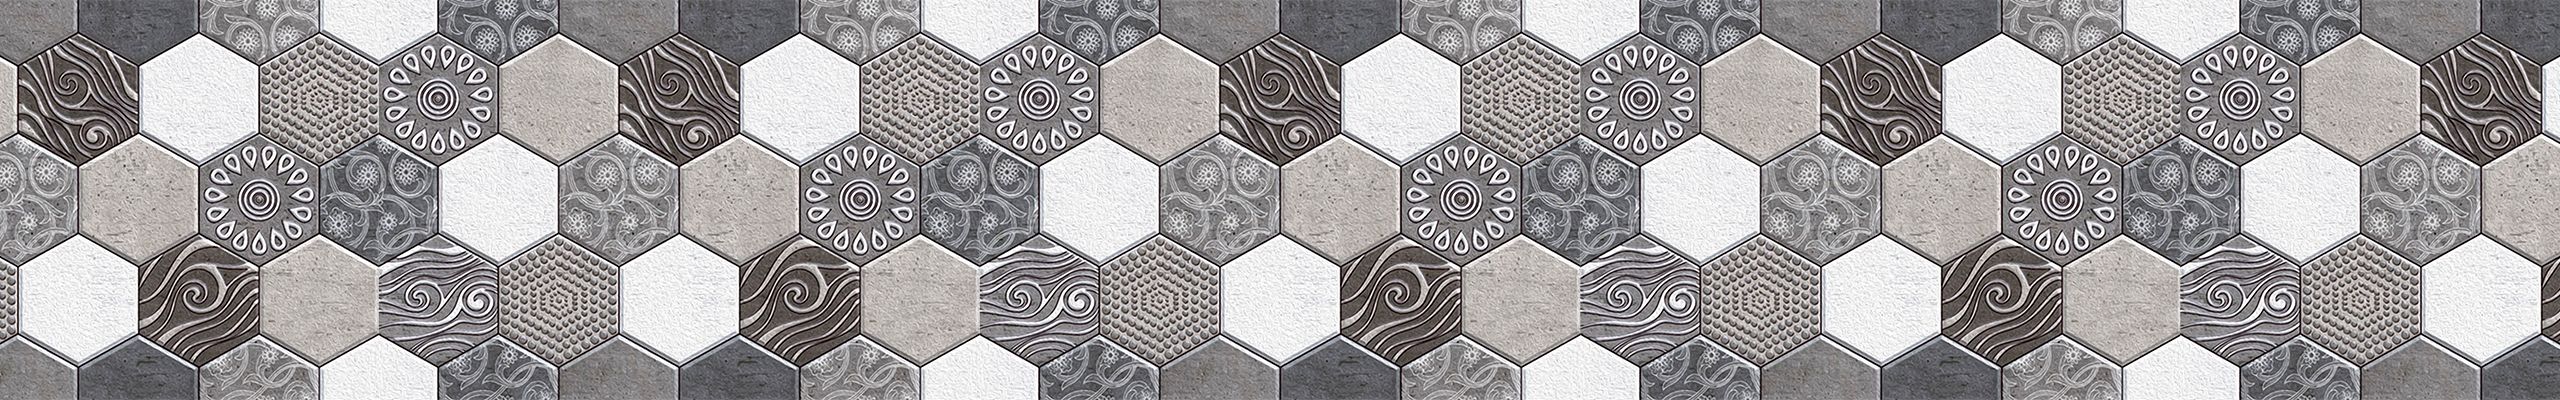 Hexagon decorated tiles